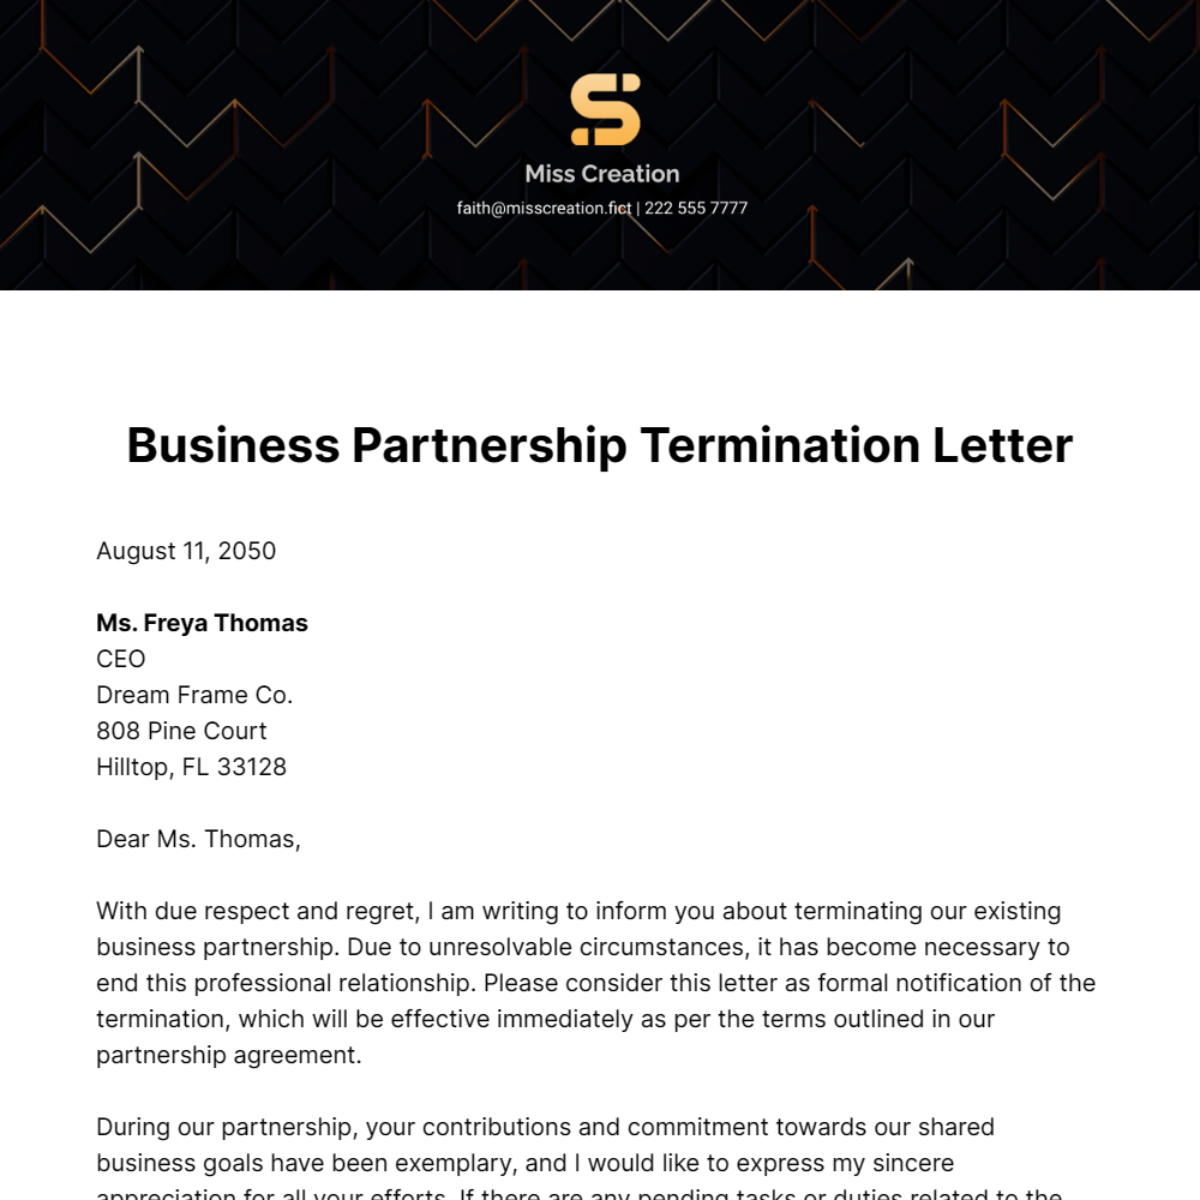 Business Partnership Termination Letter Template